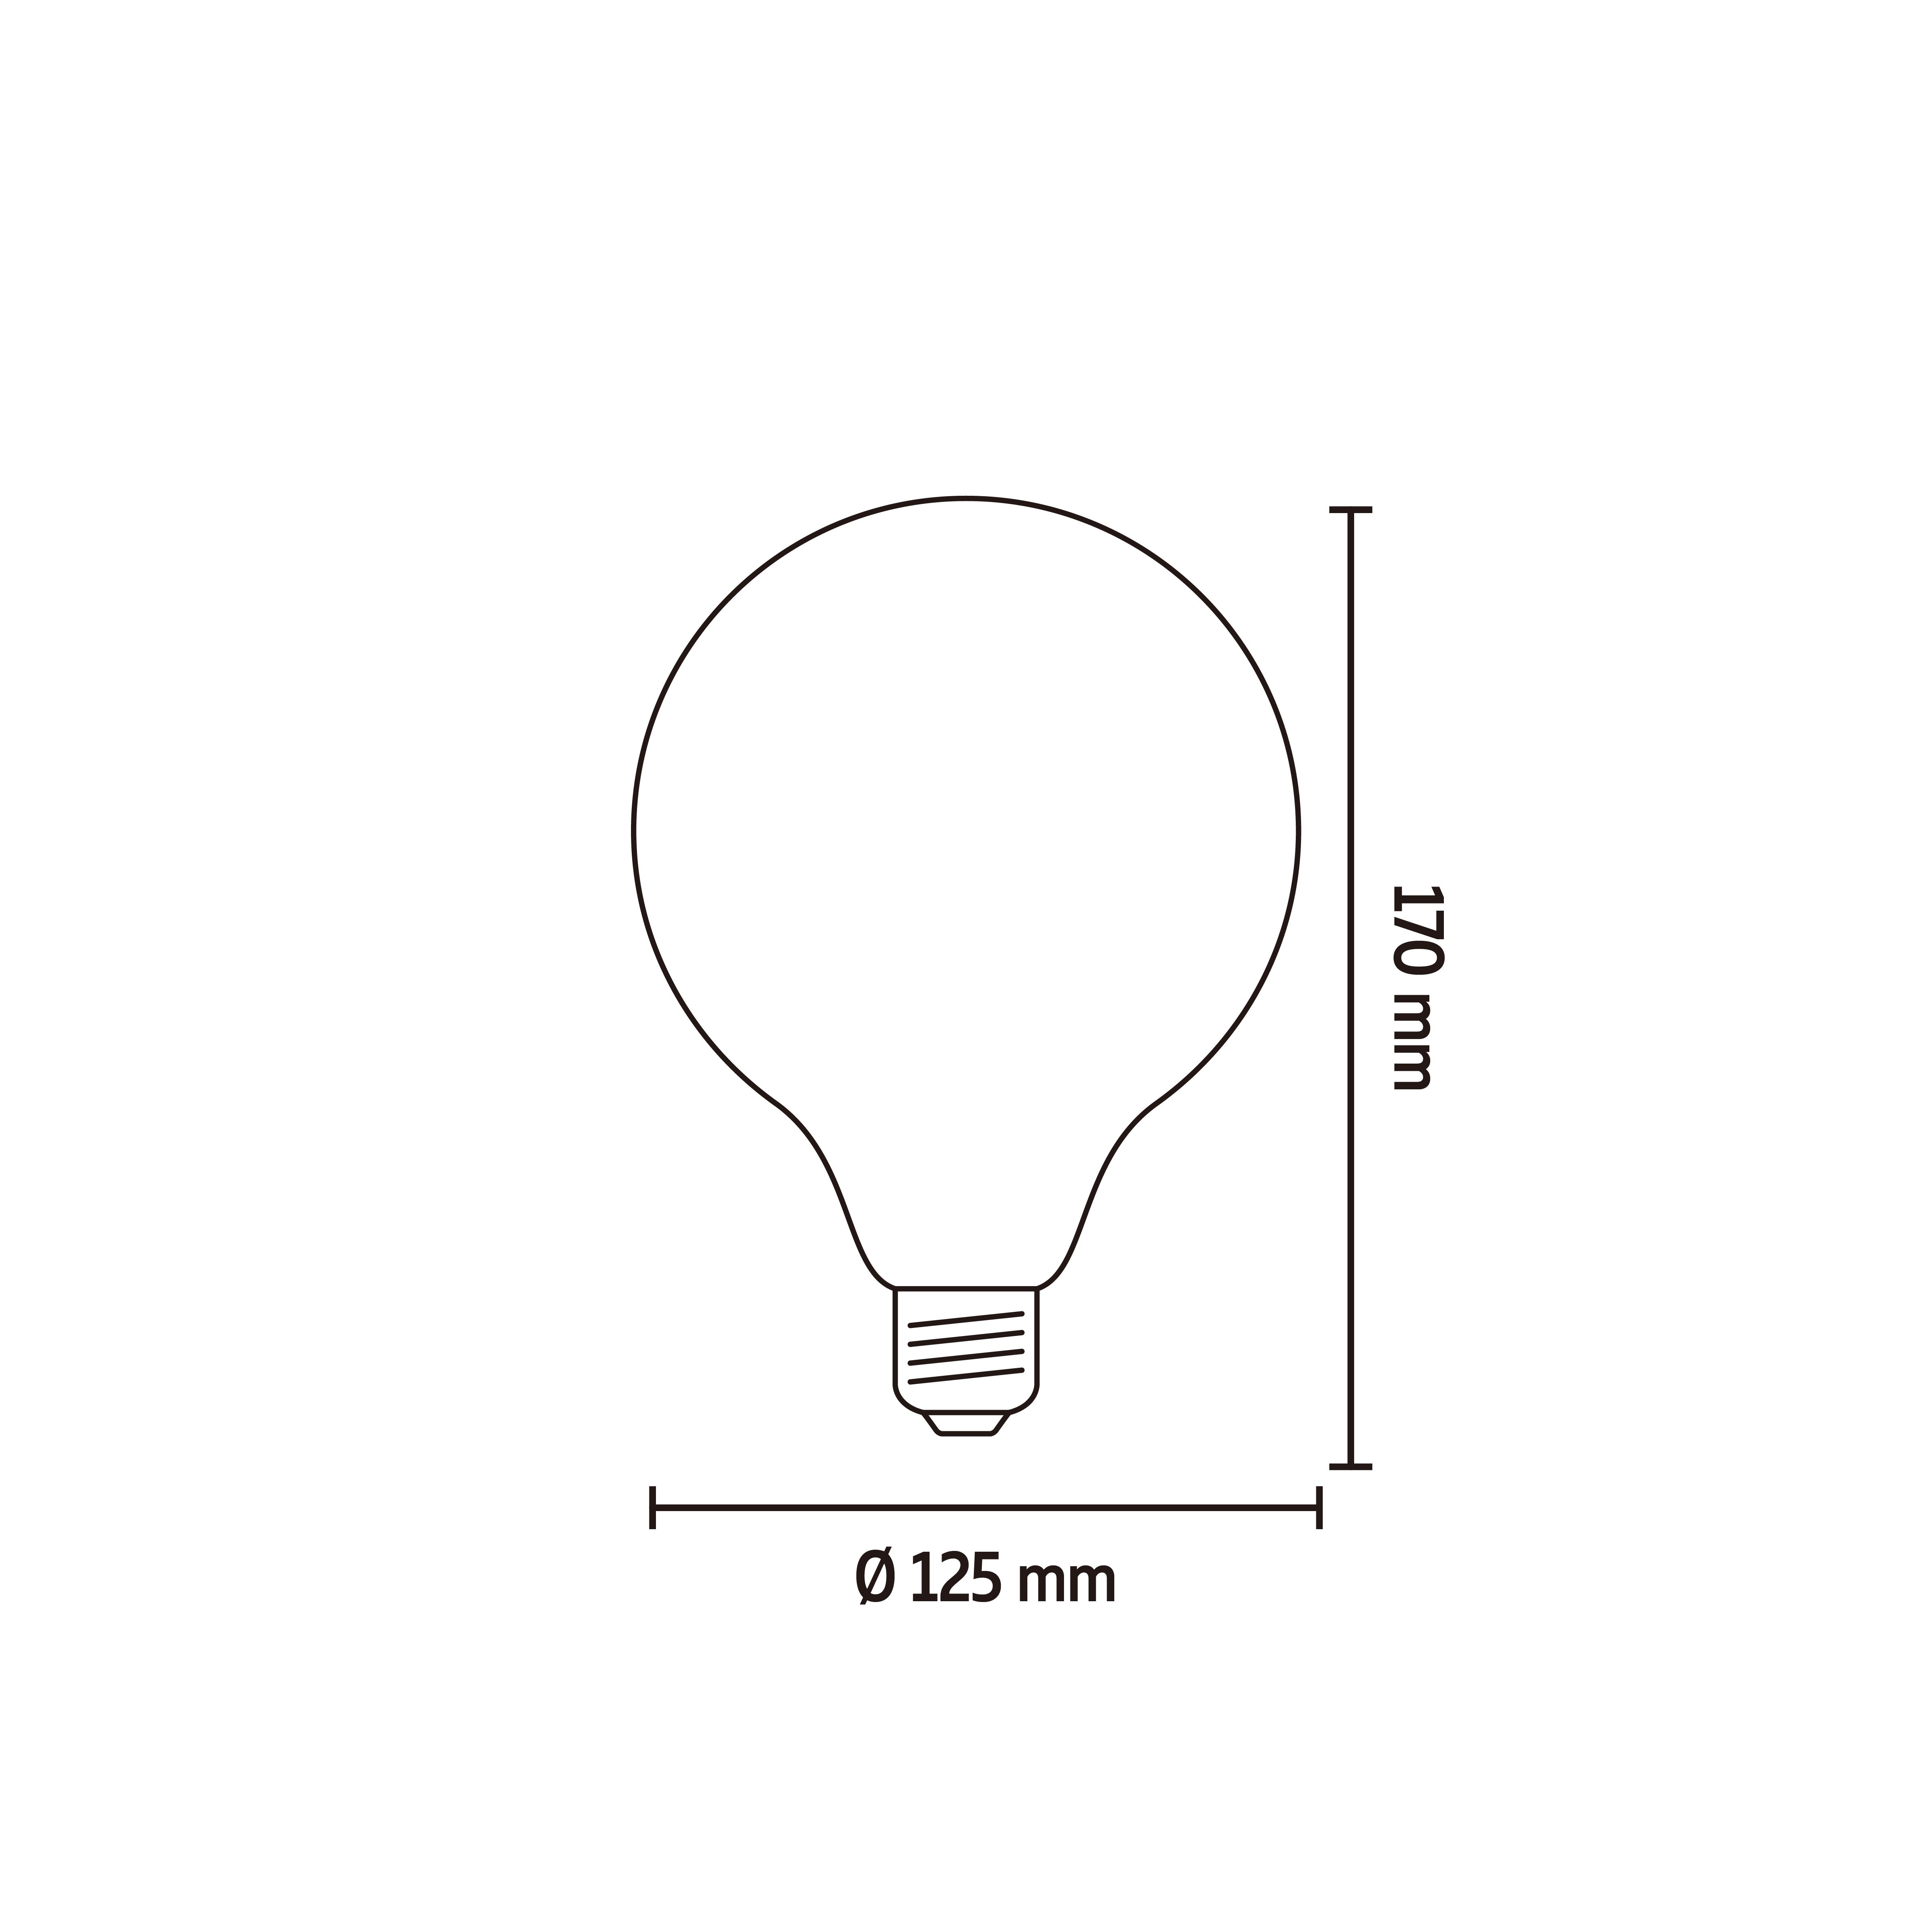 CALEX E27 4W 100lm Smoke Globe Extra warm white LED Dimmable Filament Light bulb